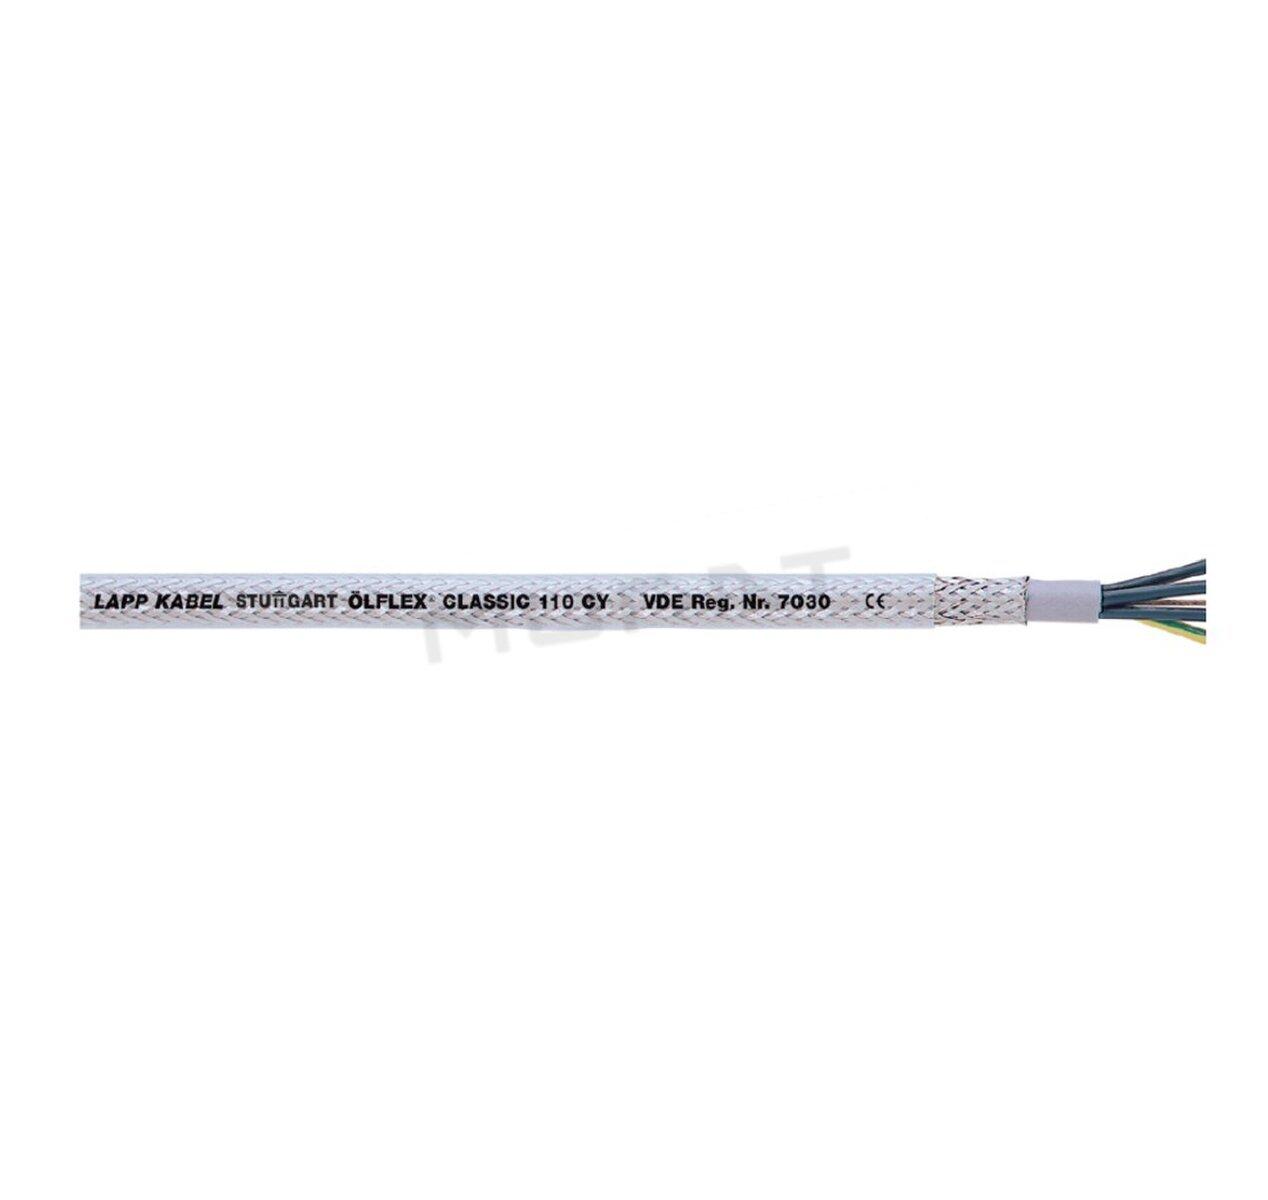 Kábel OLFLEX CLASSIC 110 CY 7Gx1 mm2